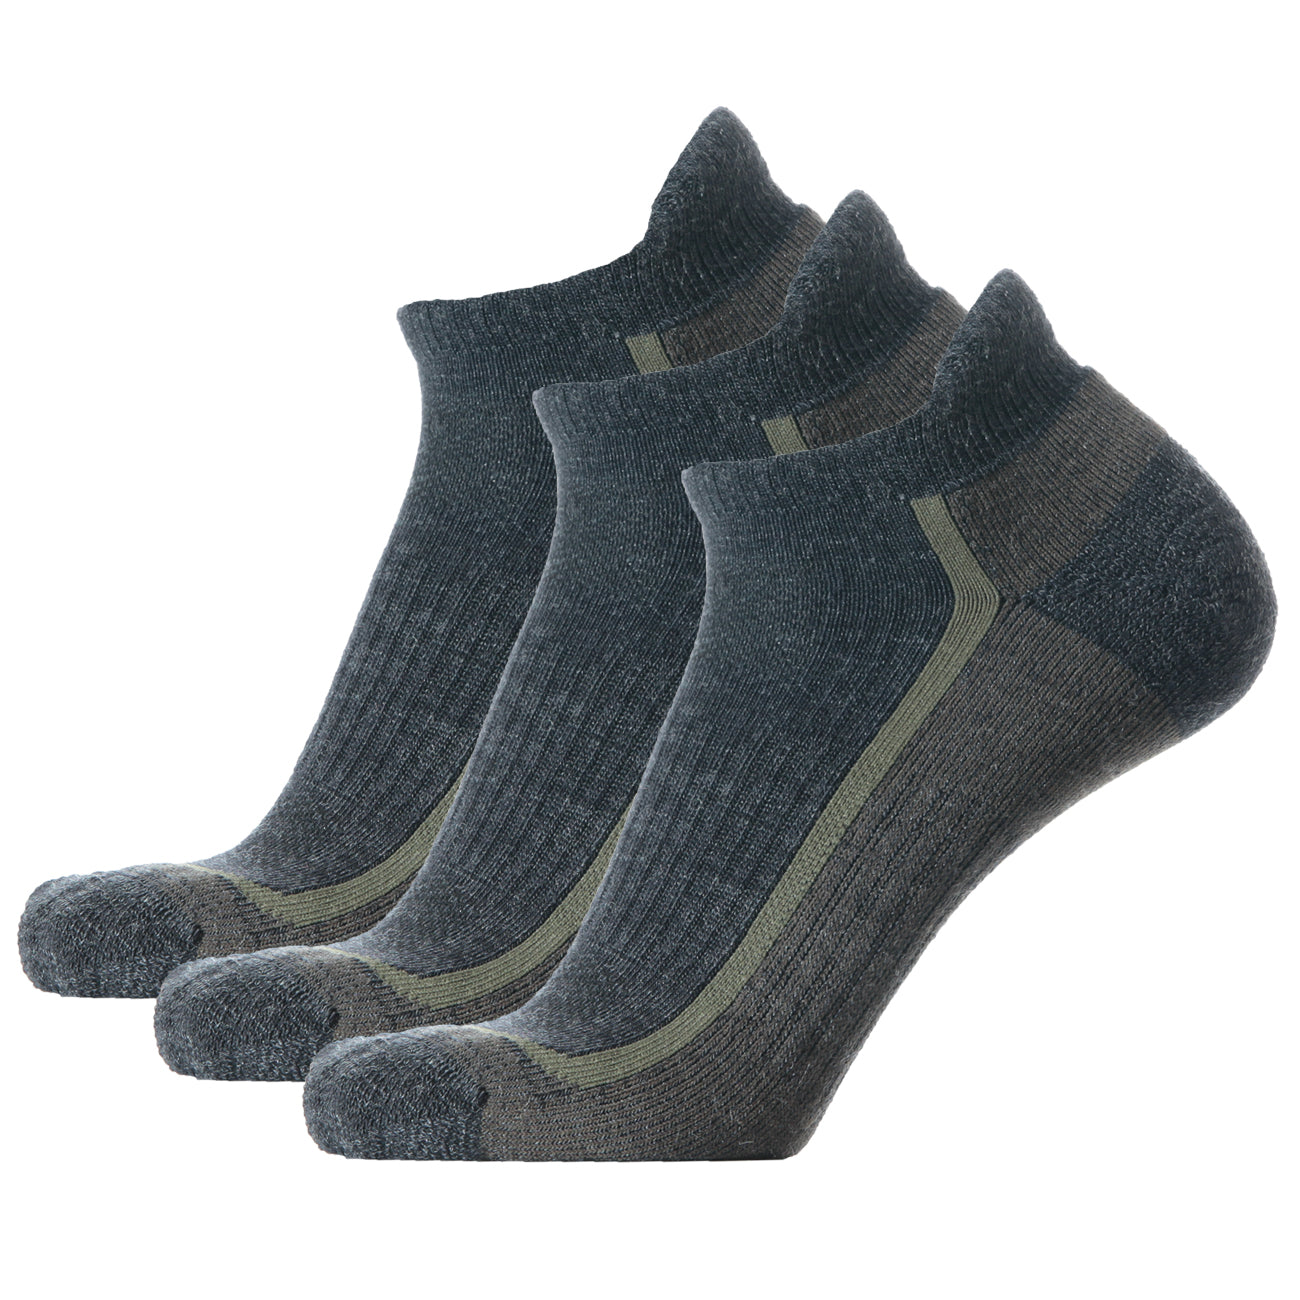 SOLAX 3 pairs Man's Merino wool No Show socks